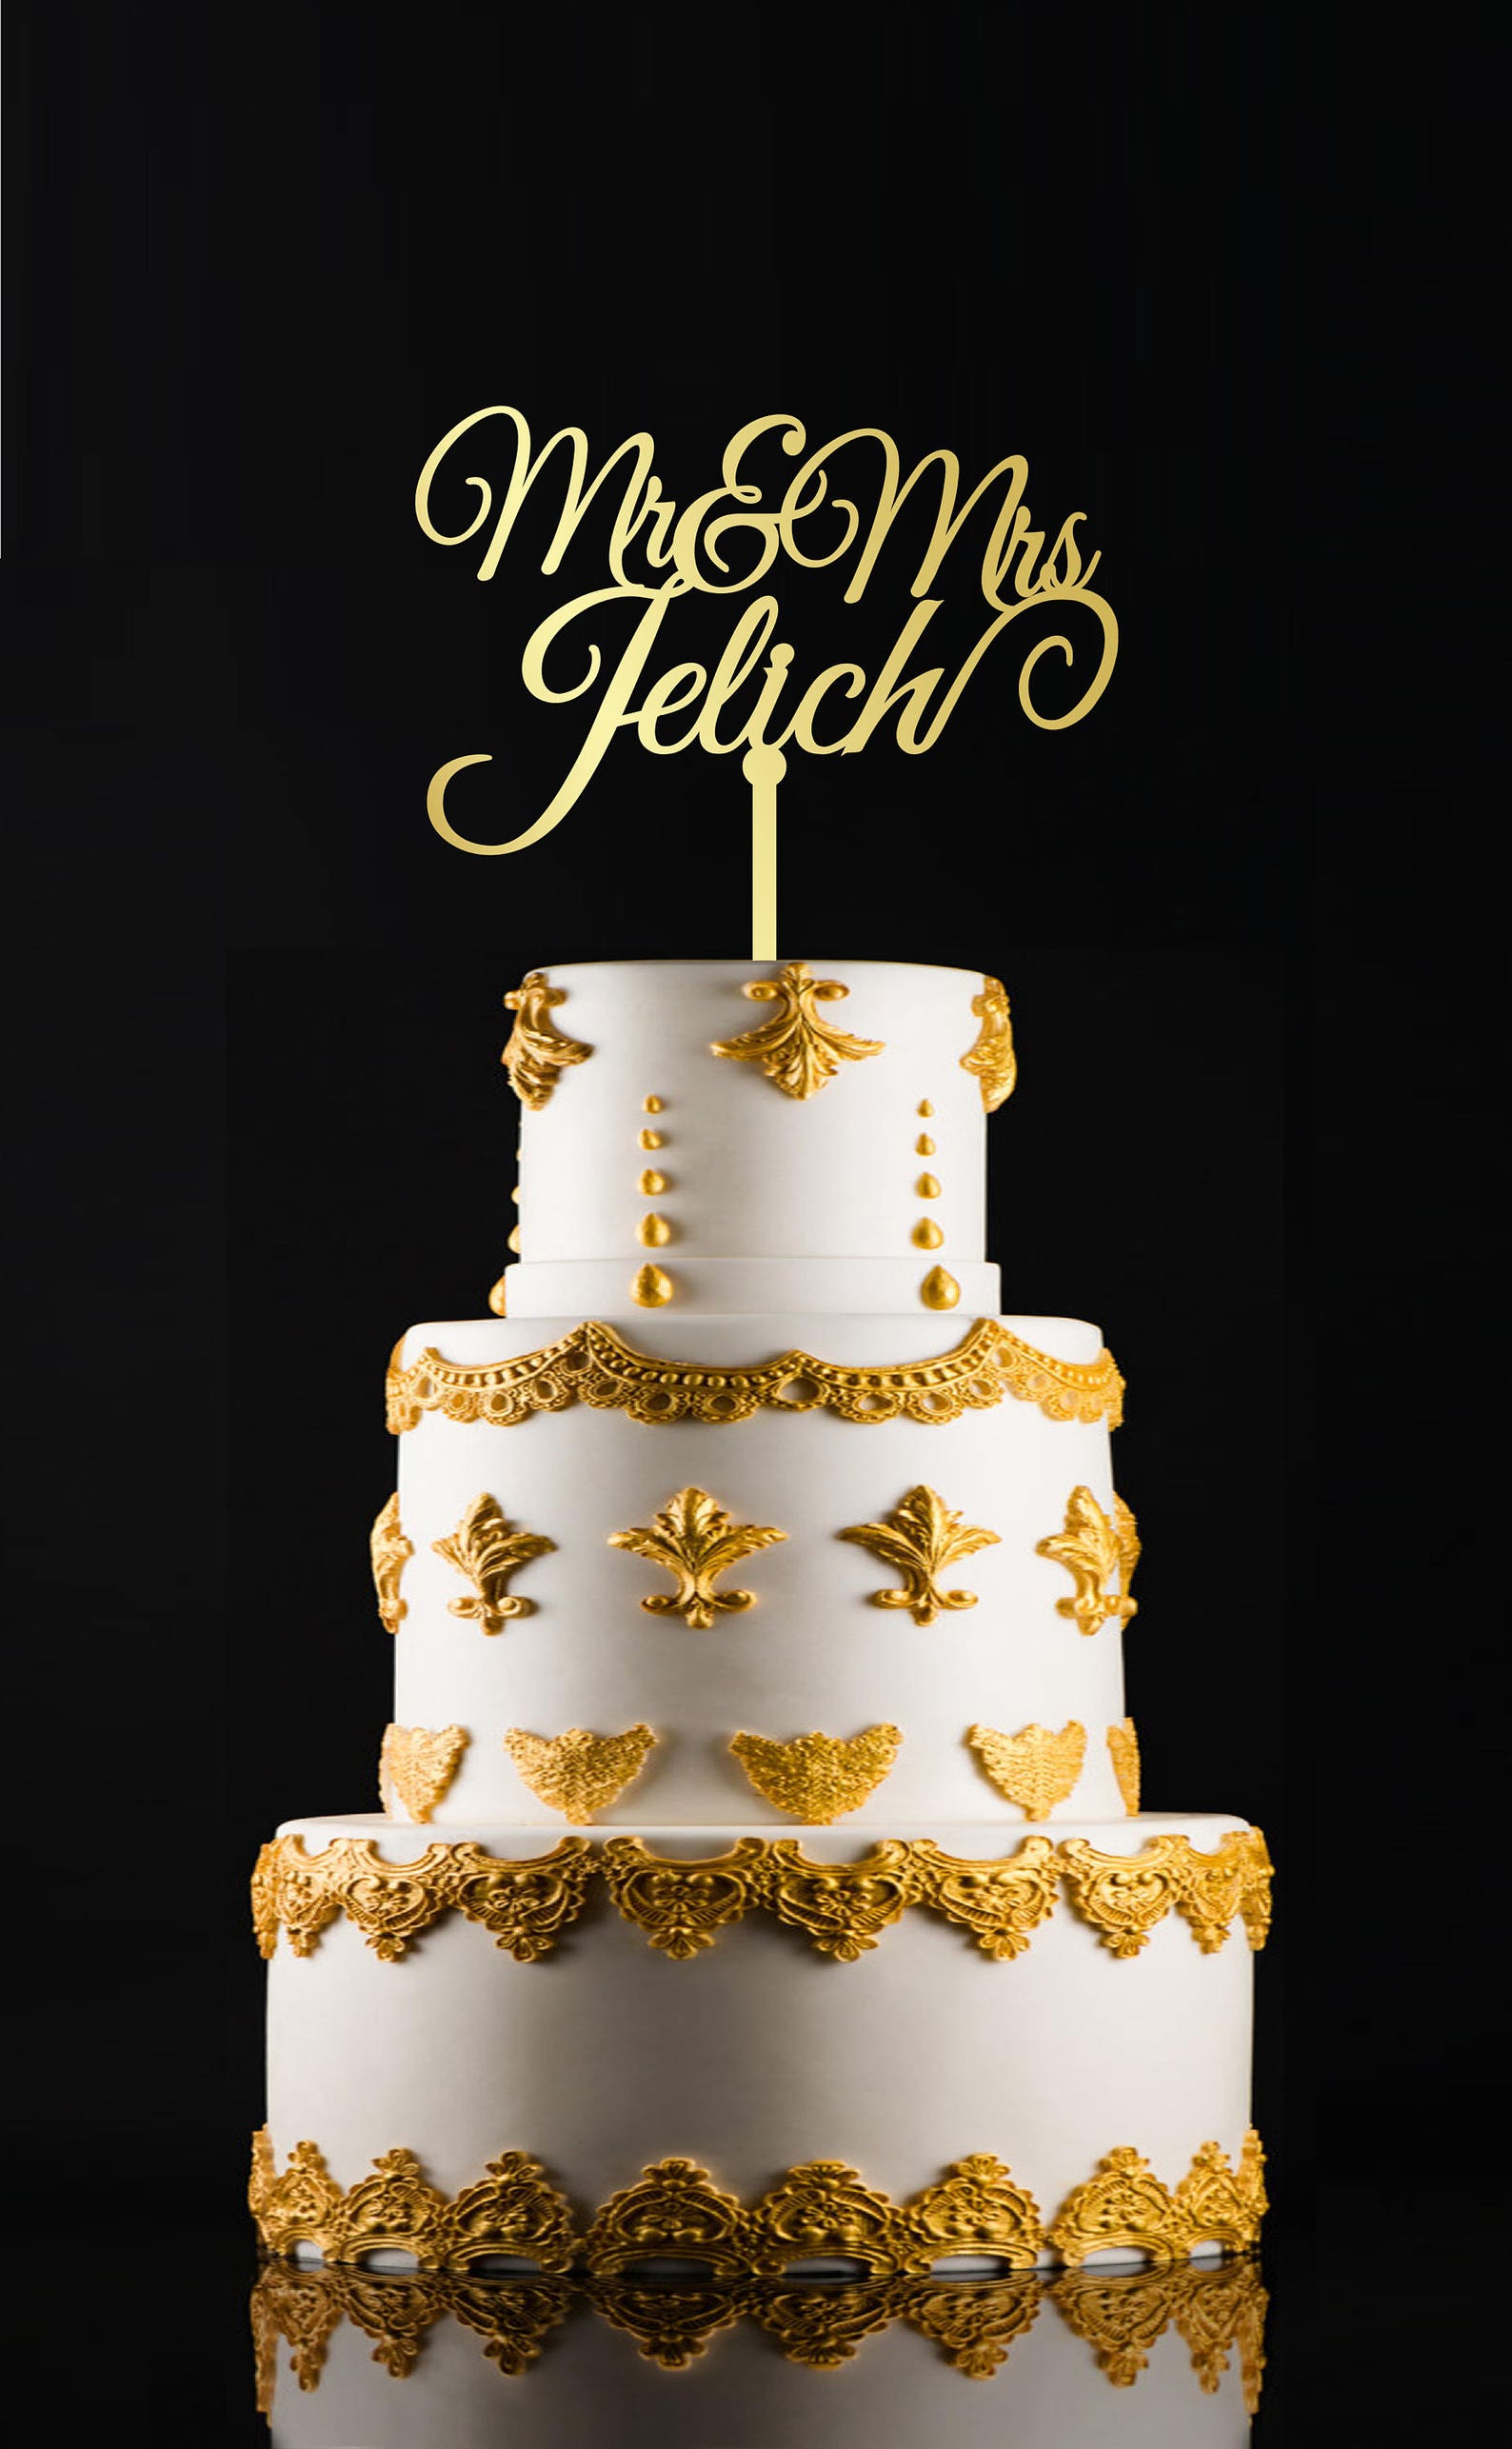 Surname Cake Topper Custom Wedding Cake Topper Personalized | Etsy